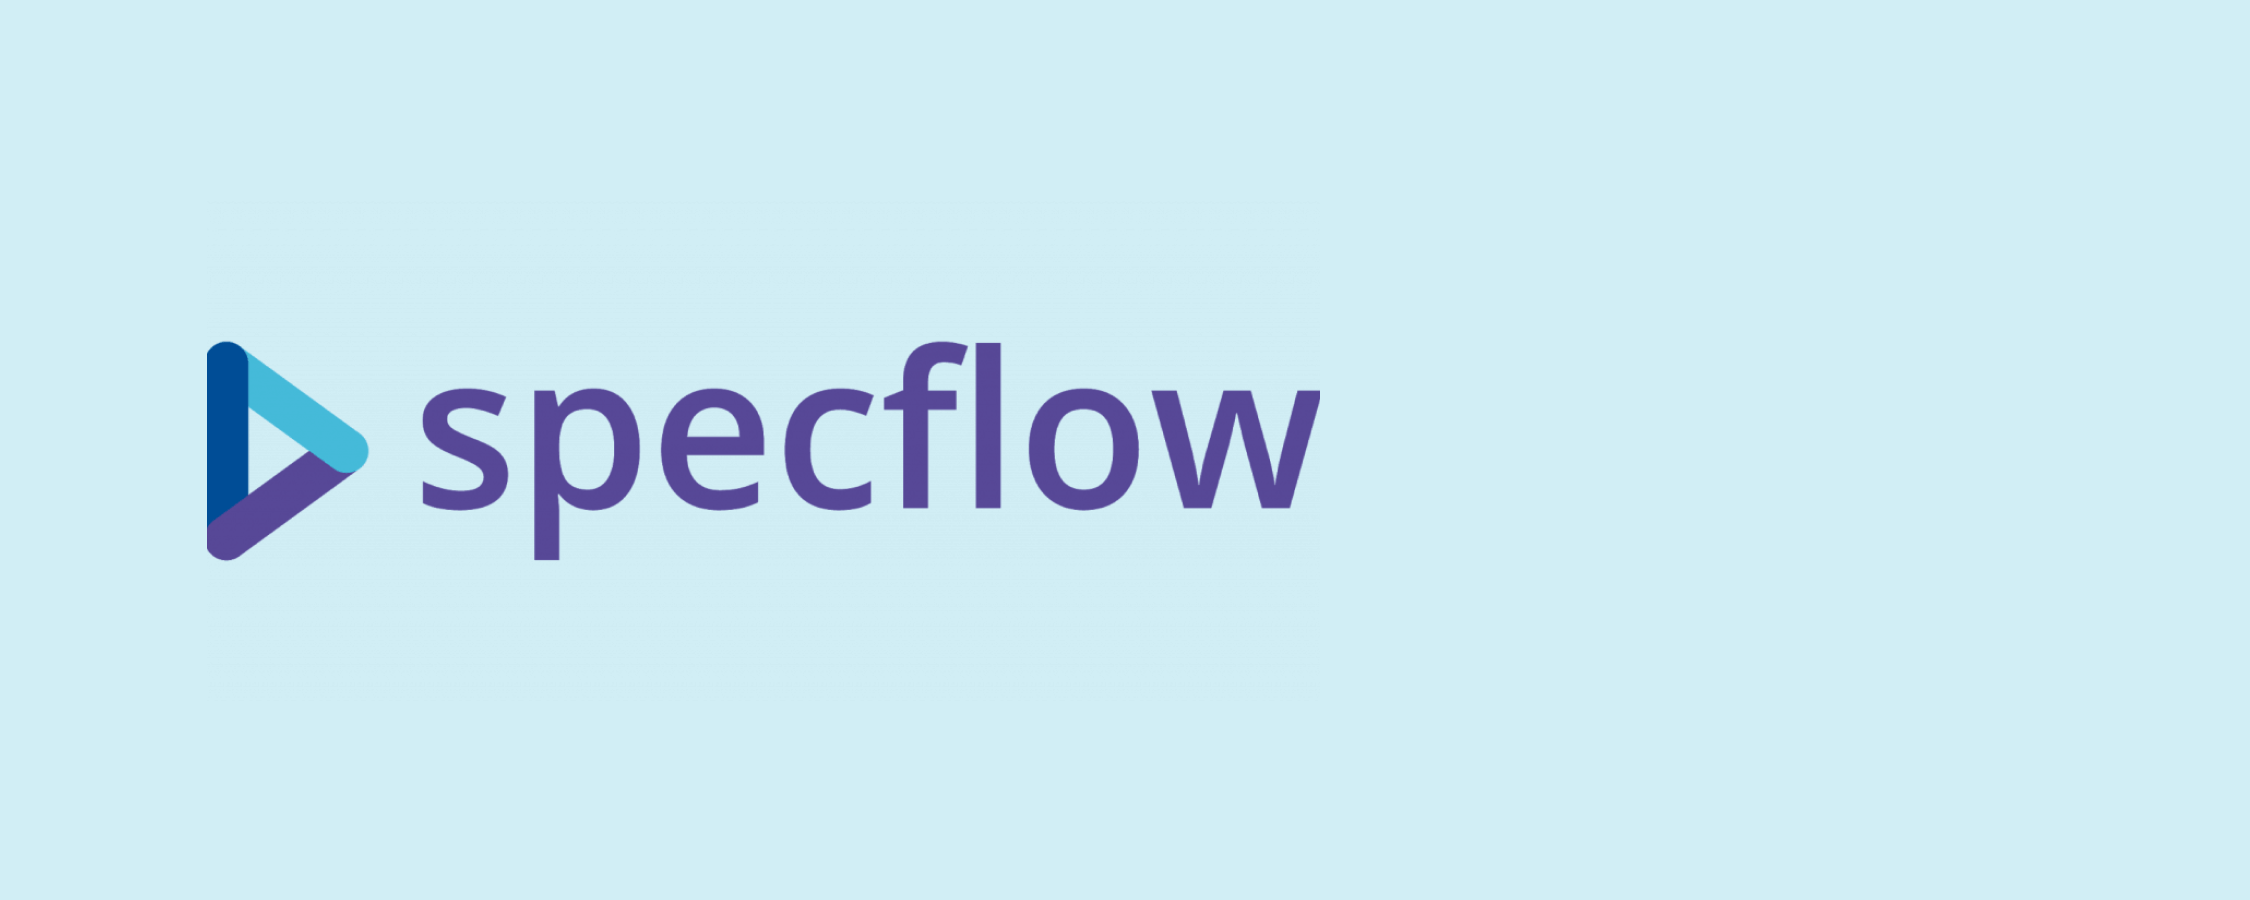 specflow